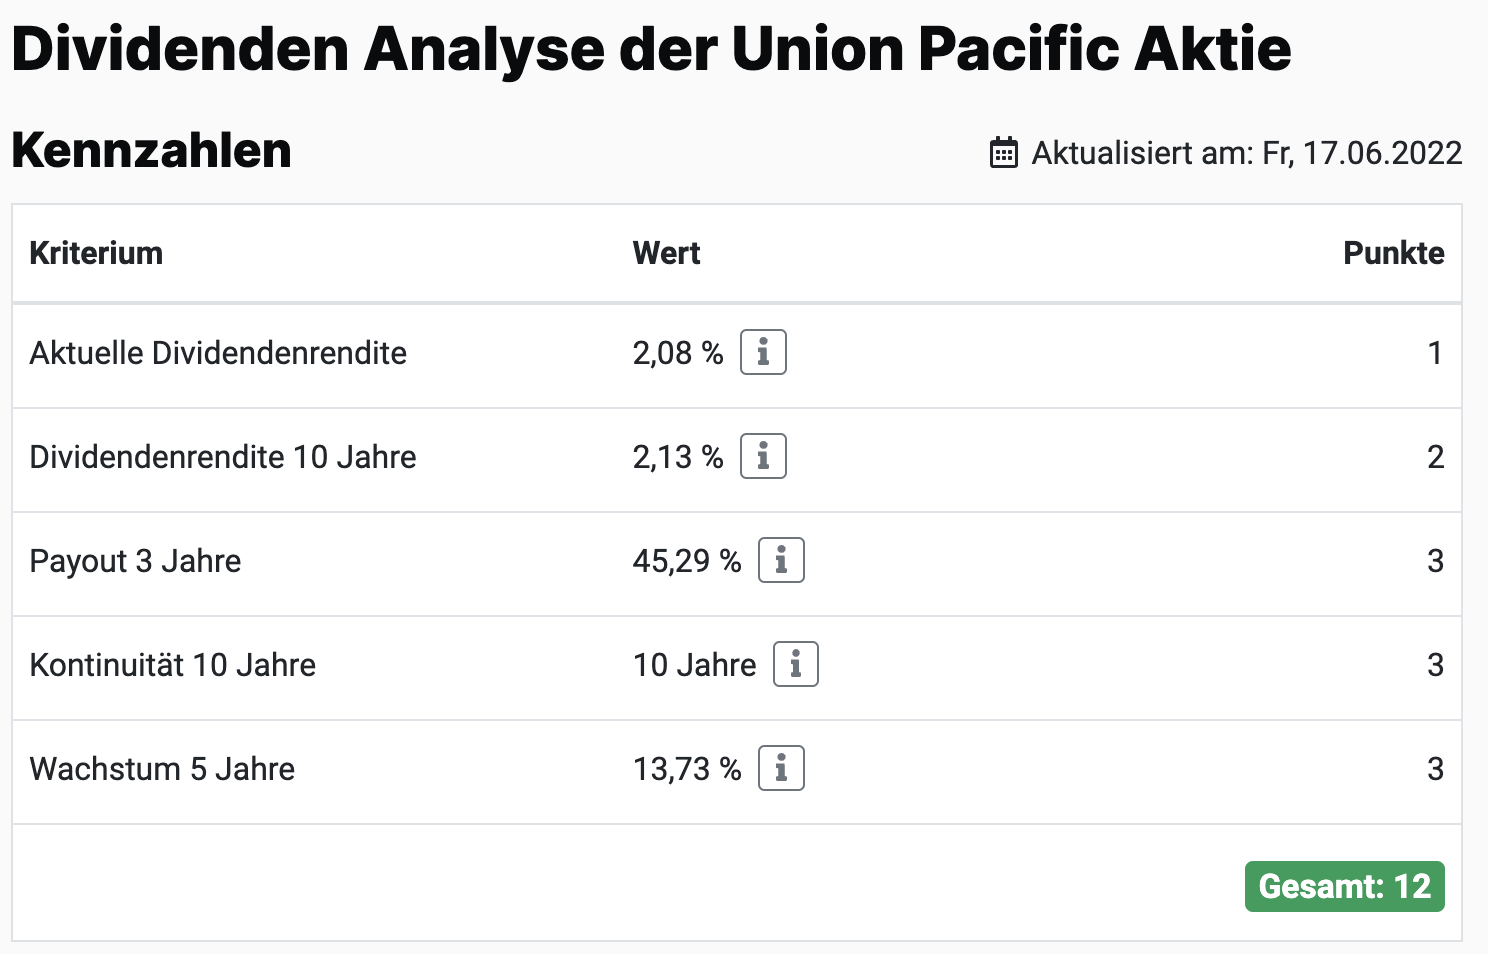 Dividenden-Score der Union Pacific Aktie